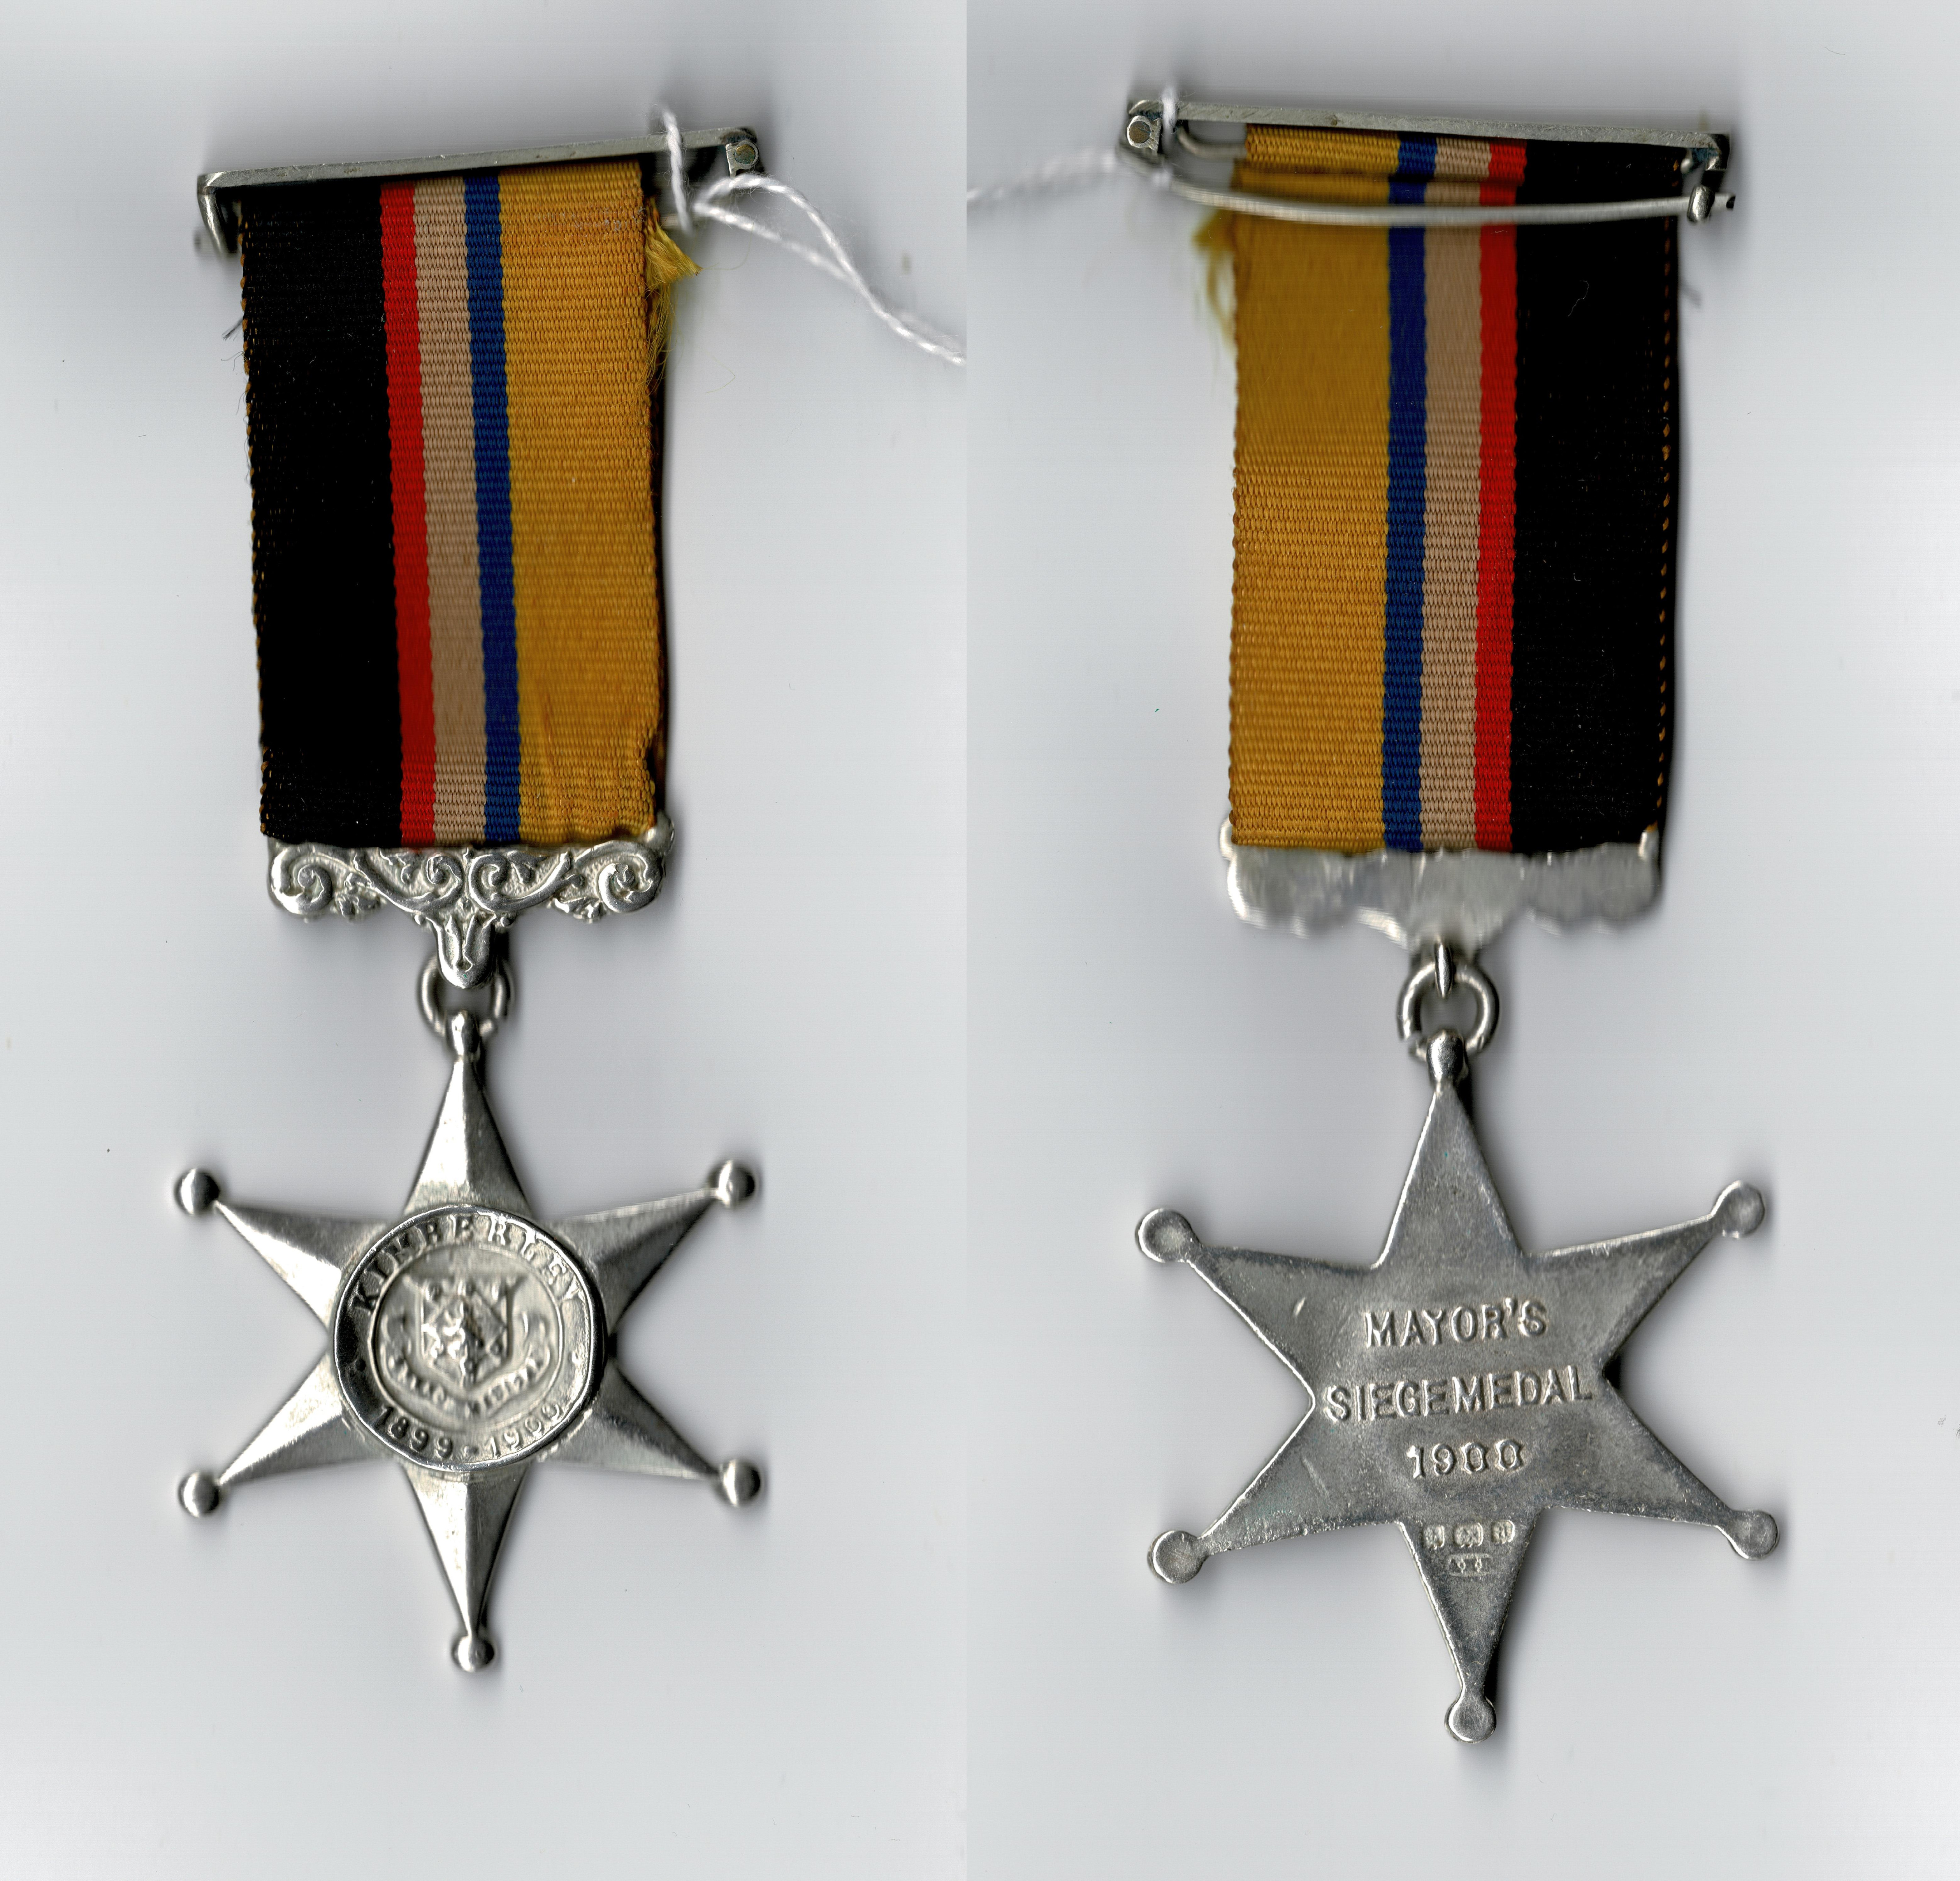 Kimberley Star Medal